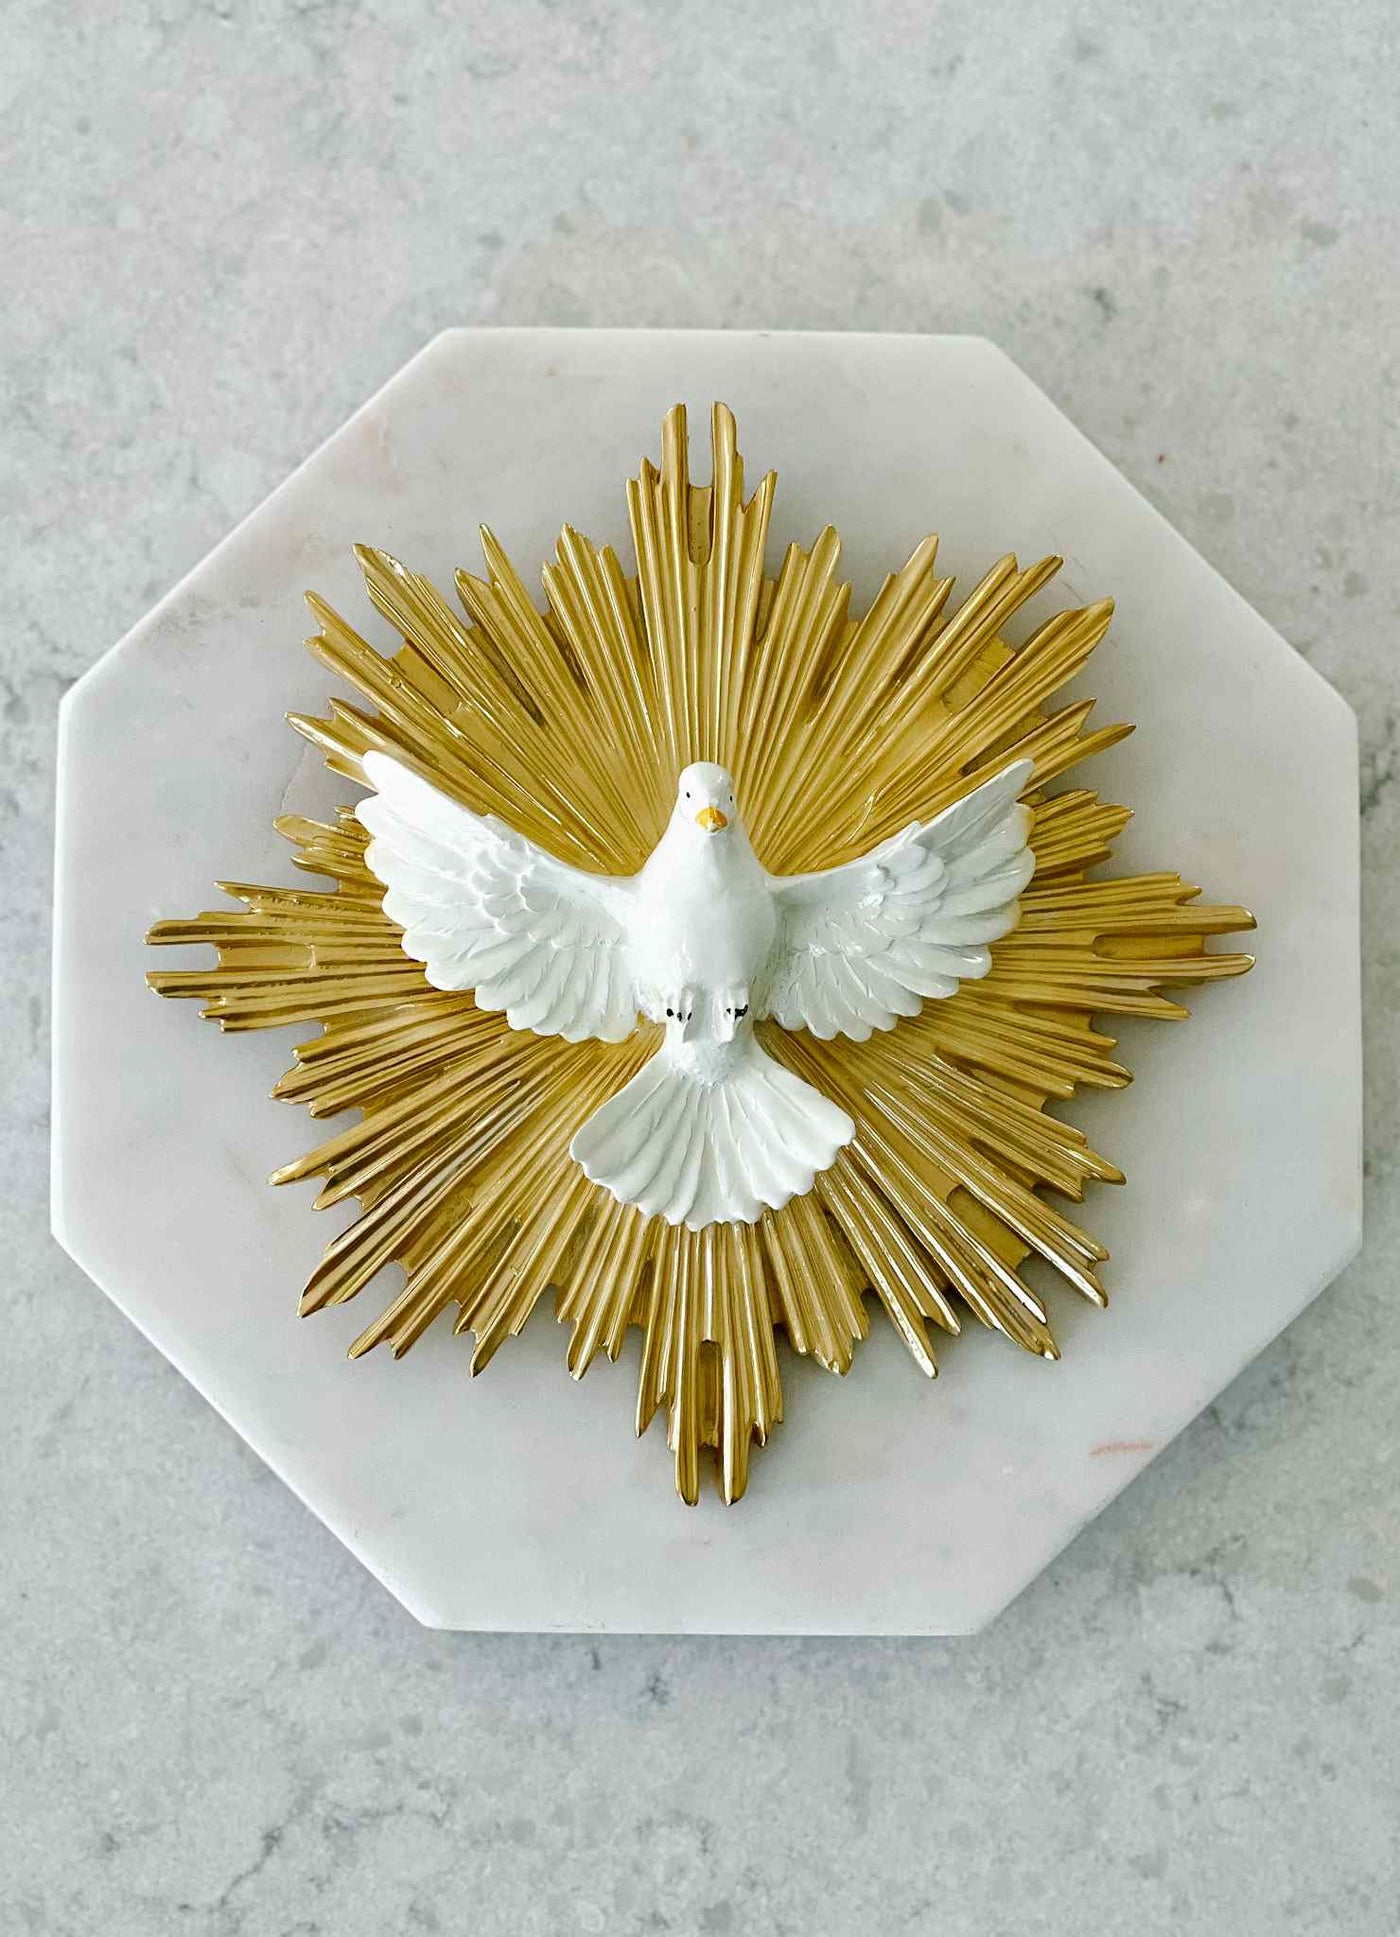 holy spirit dove